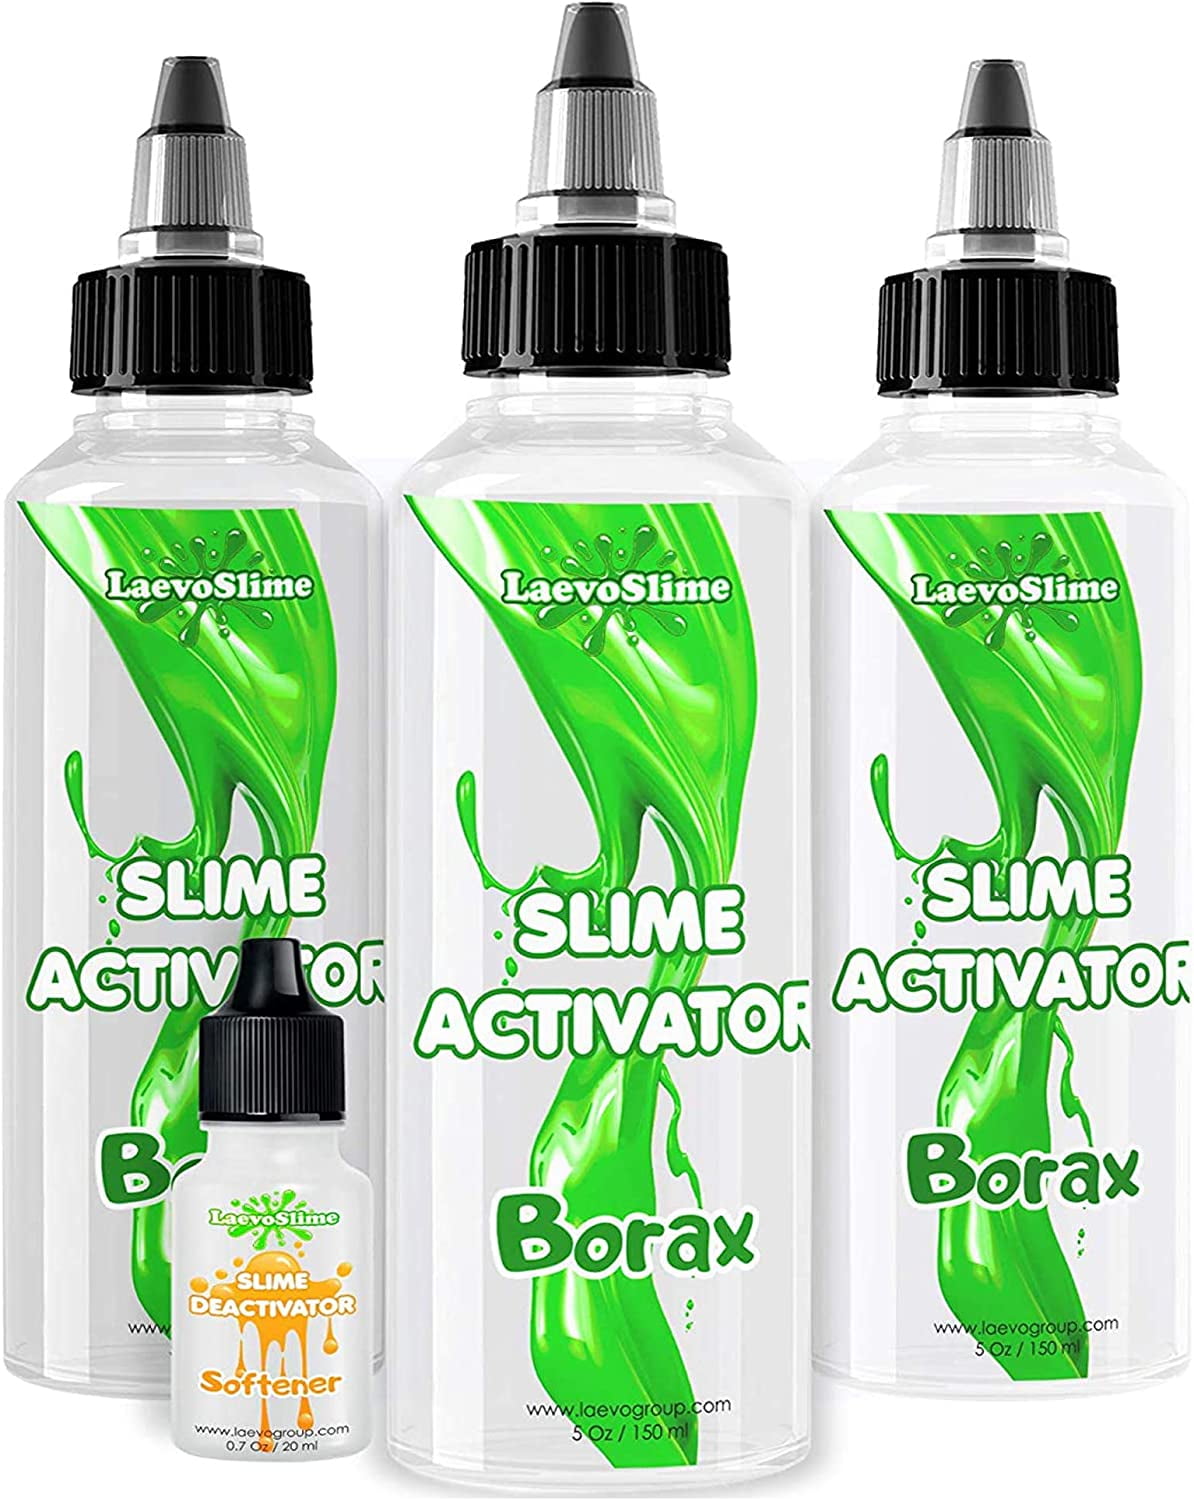 How to Make DIY Glitter Slime: Glue + Slime Activator (Borax Solution)